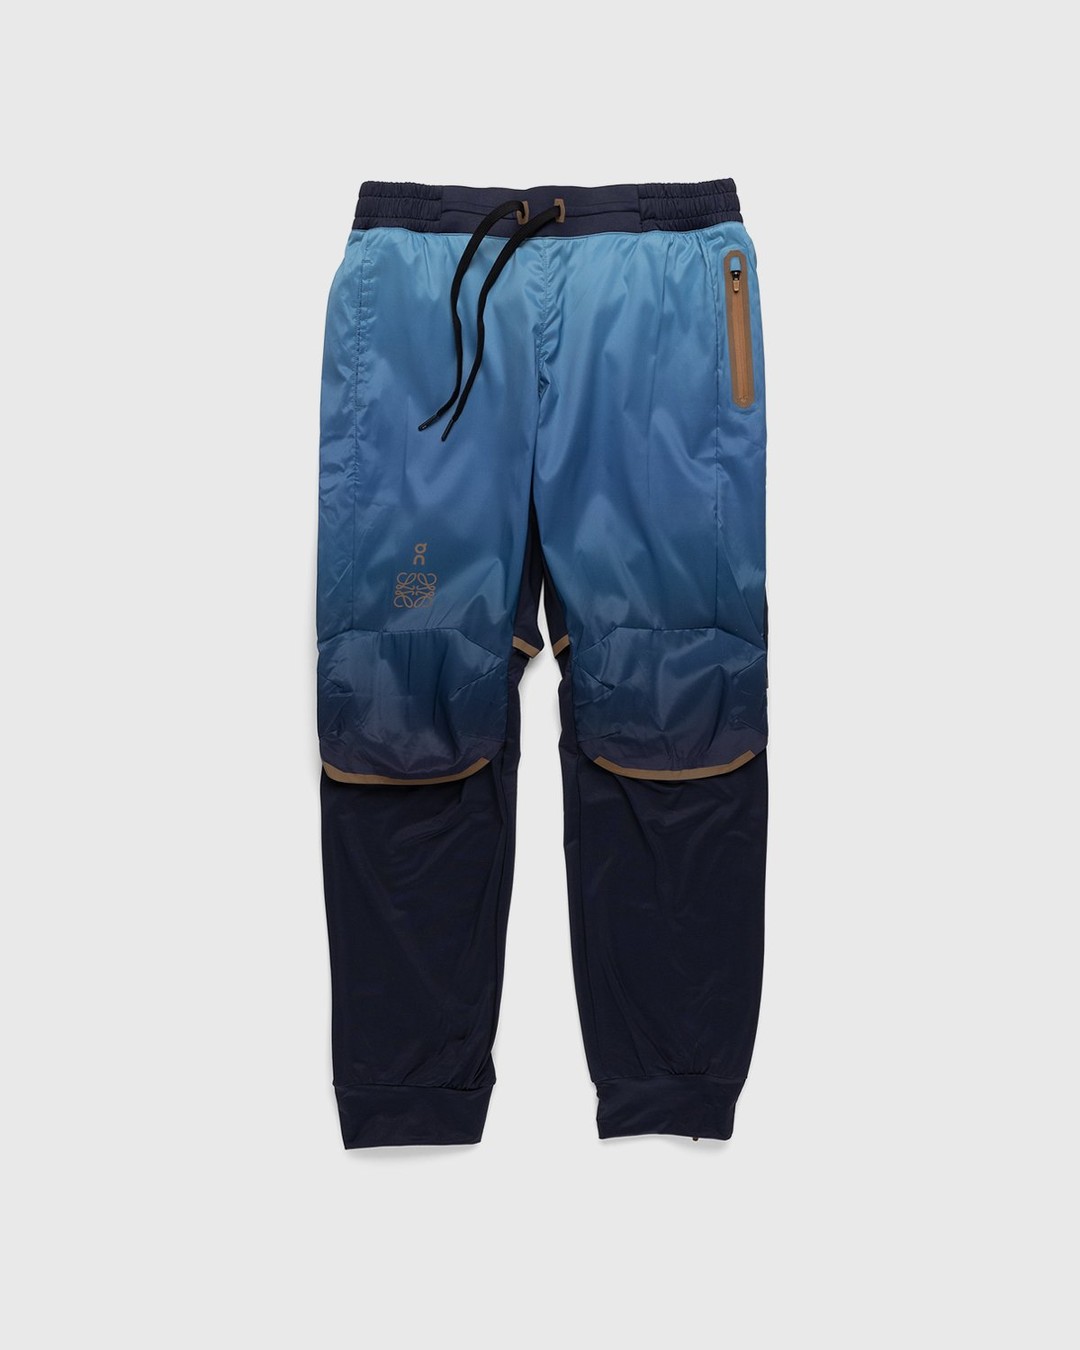 Loewe x On – Women's Technical Running Pants Gradient Blue - Pants - Blue - Image 1